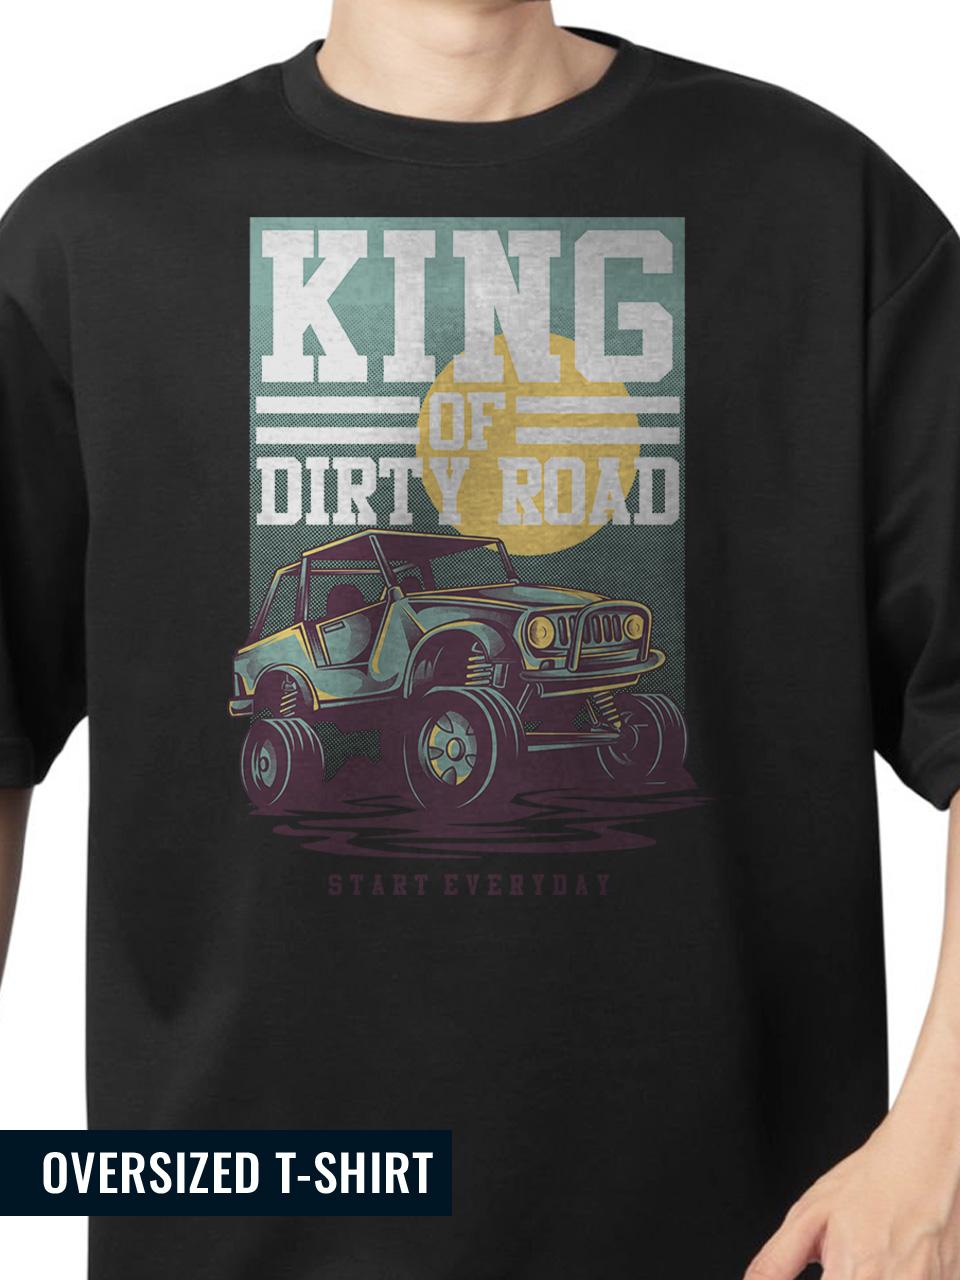 Shadowed Rodeo Majesty Oversized T-shirt